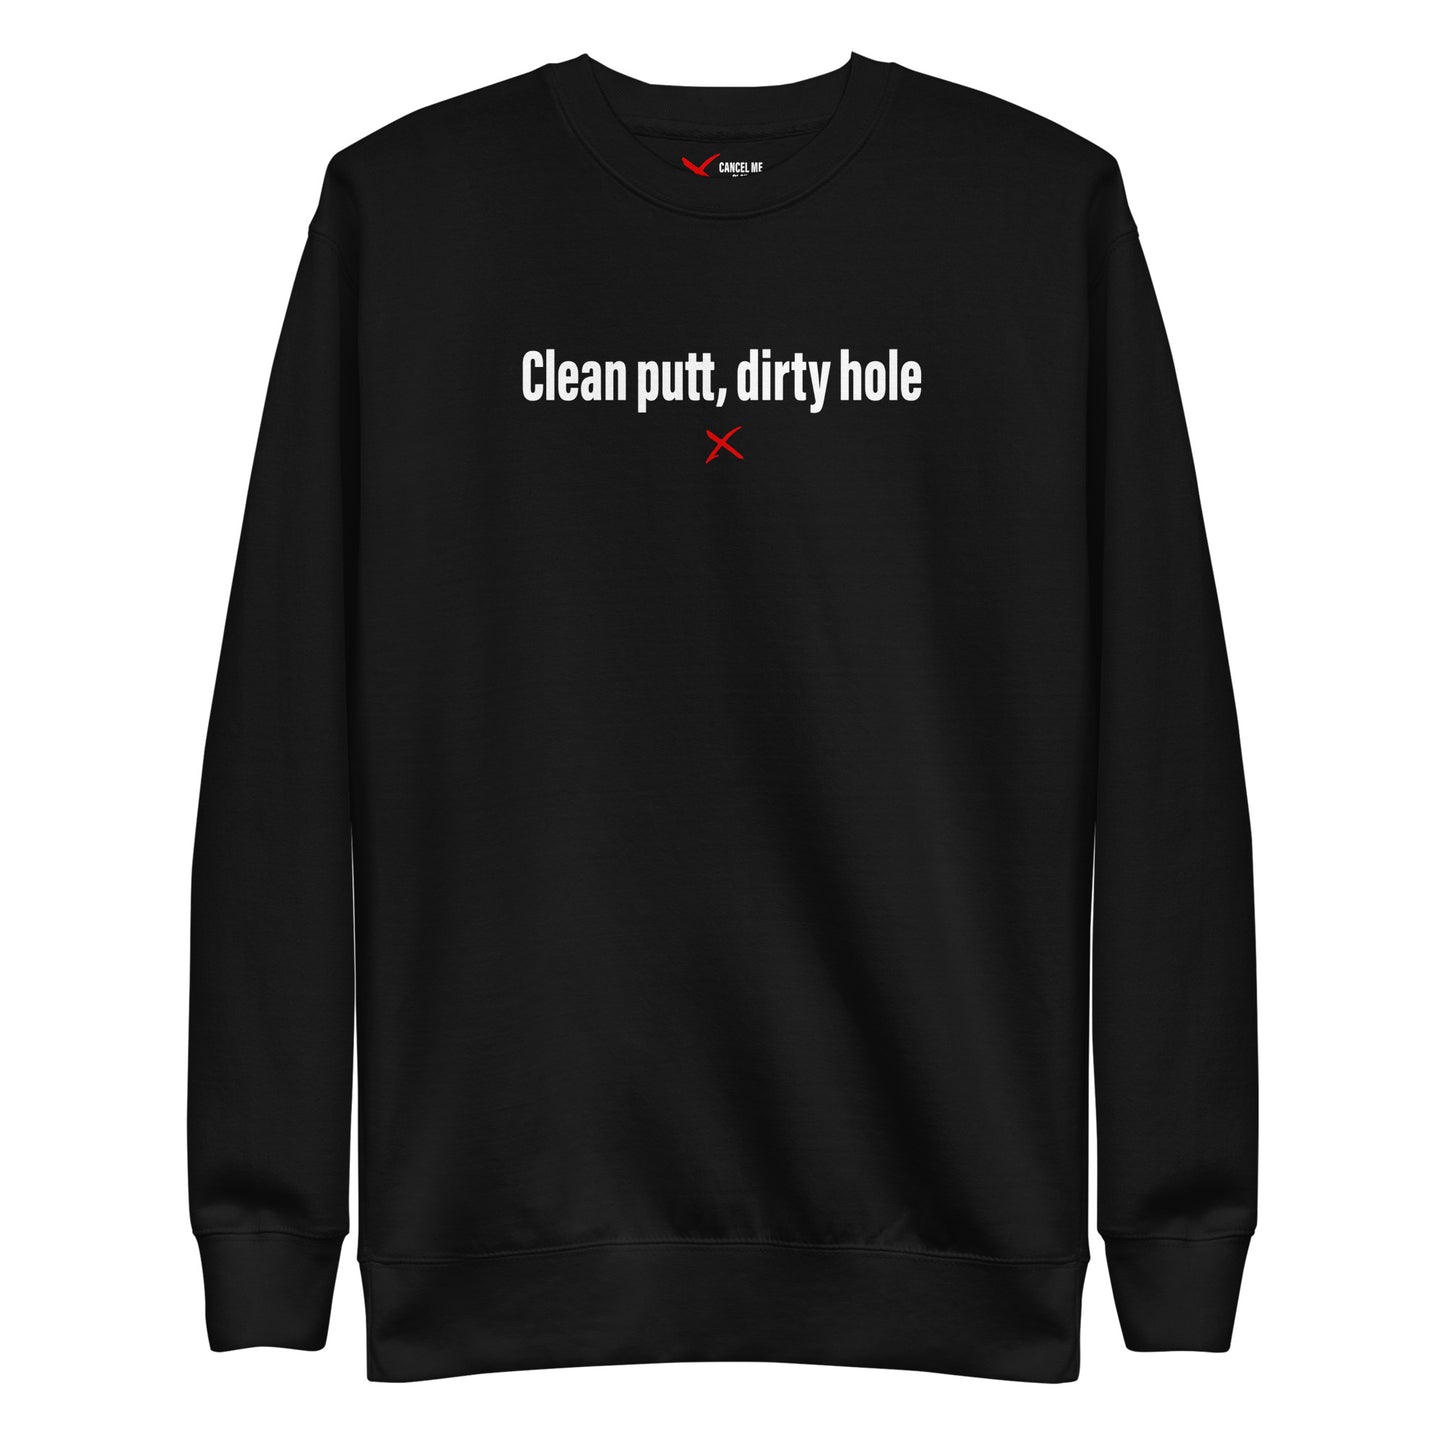 Clean putt, dirty hole - Sweatshirt